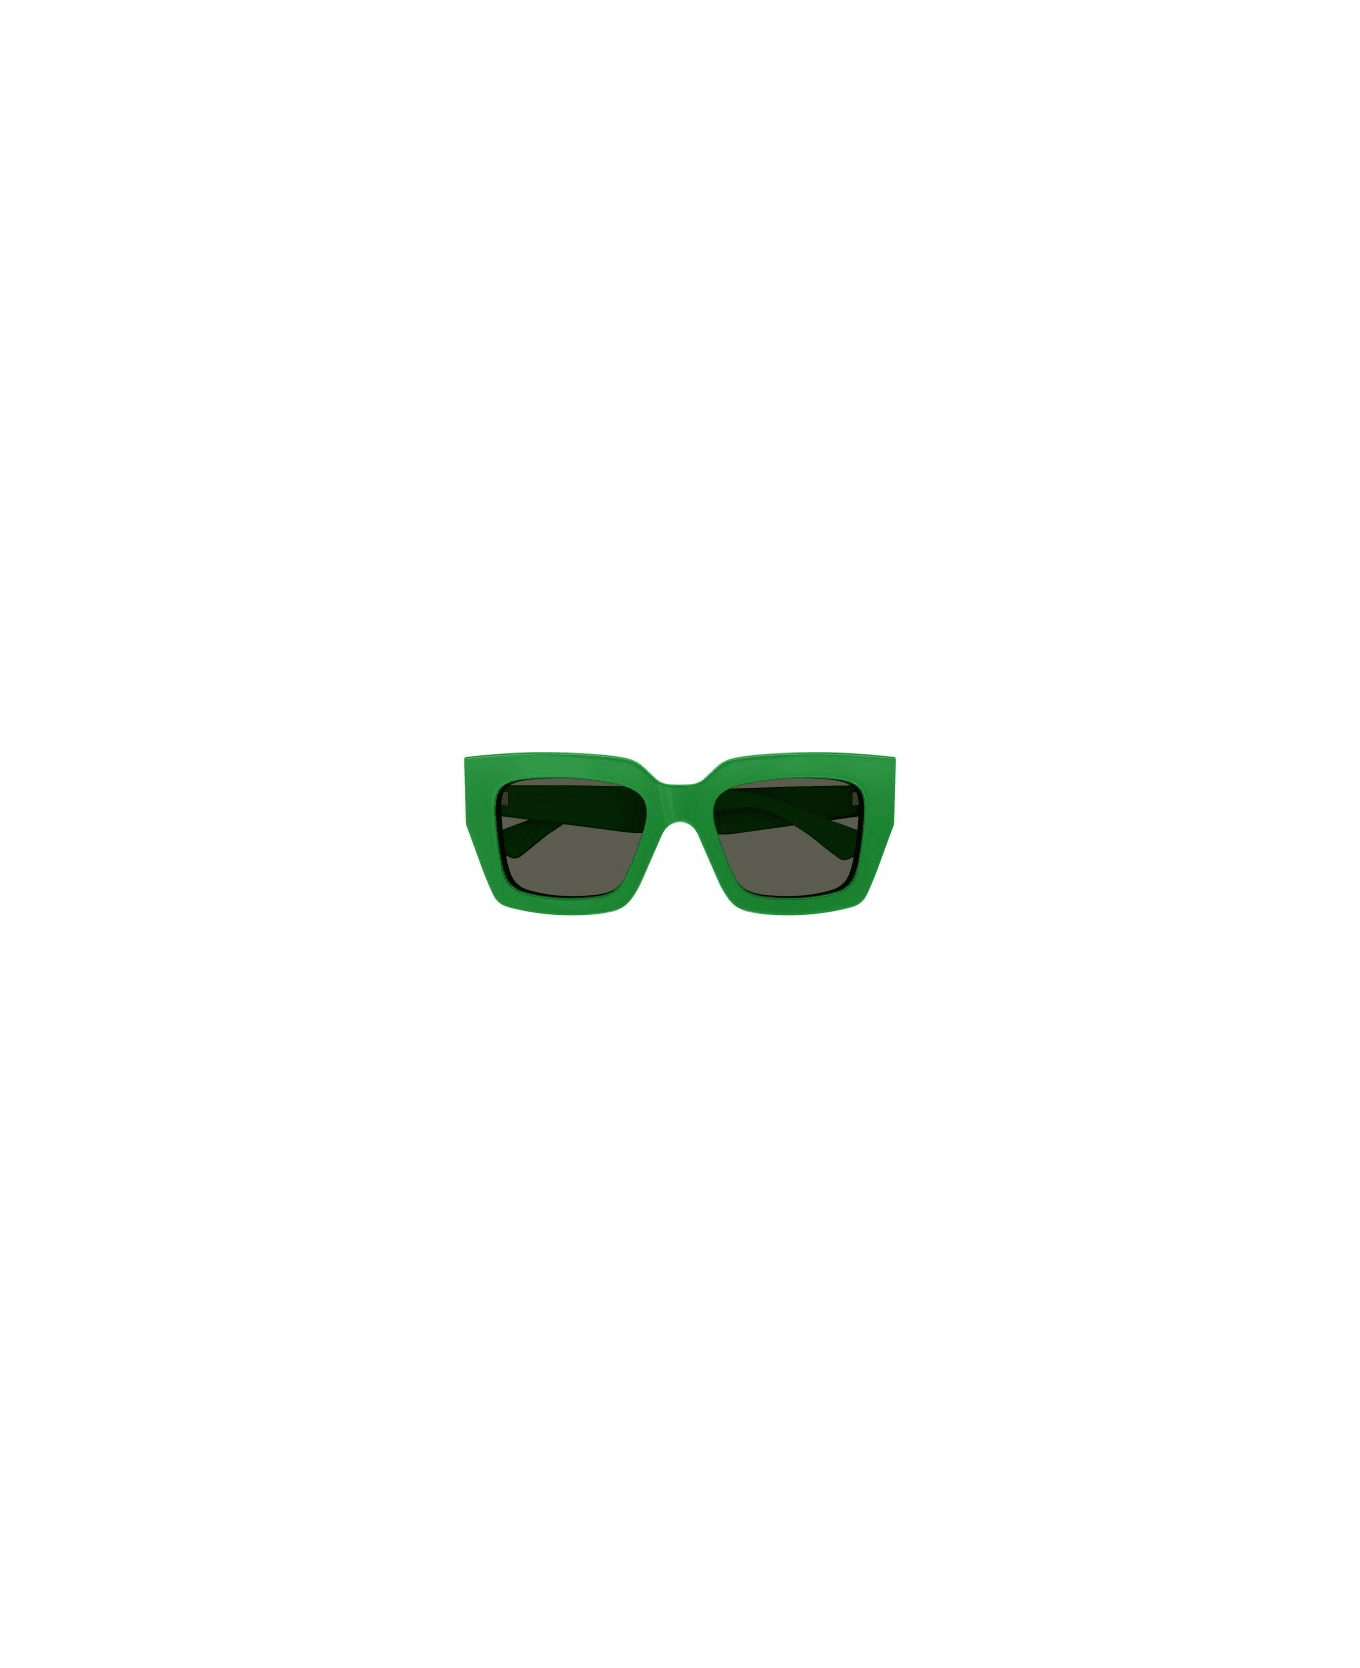 Bottega Veneta Eyewear 1fr54mg0a - 003 green green green サングラス